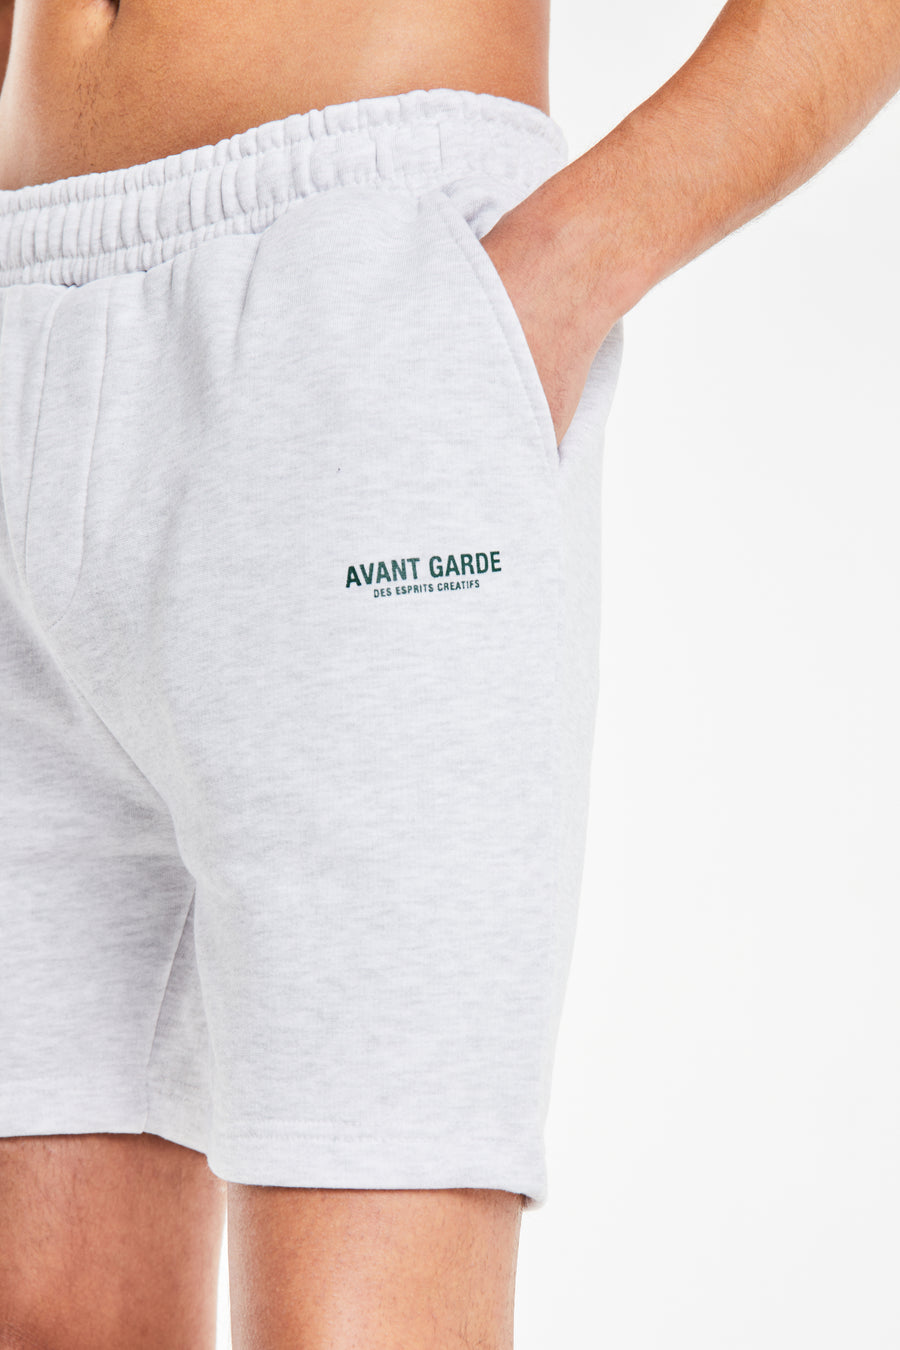 close up of 'avant garde paris' logo on jersey shorts in grey